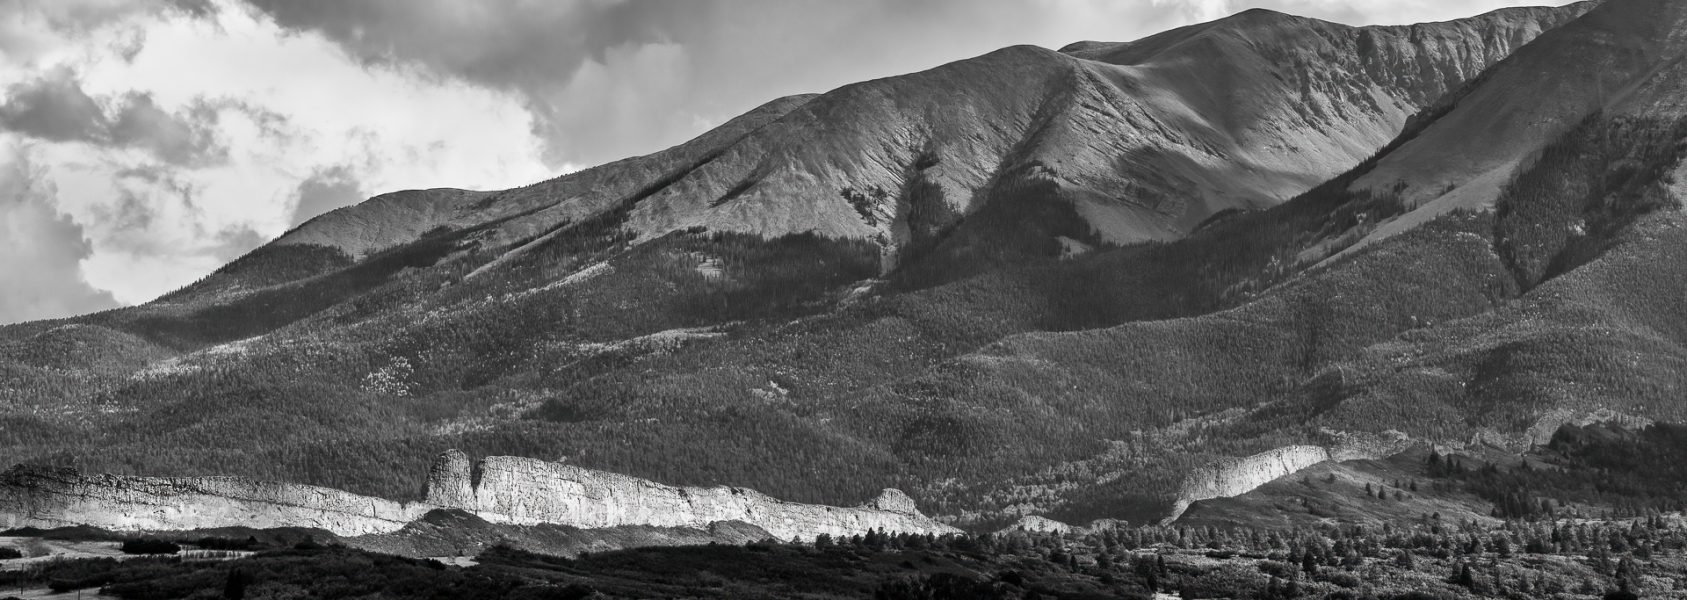 Granite Dike and Mountains - Pat Honeycutt